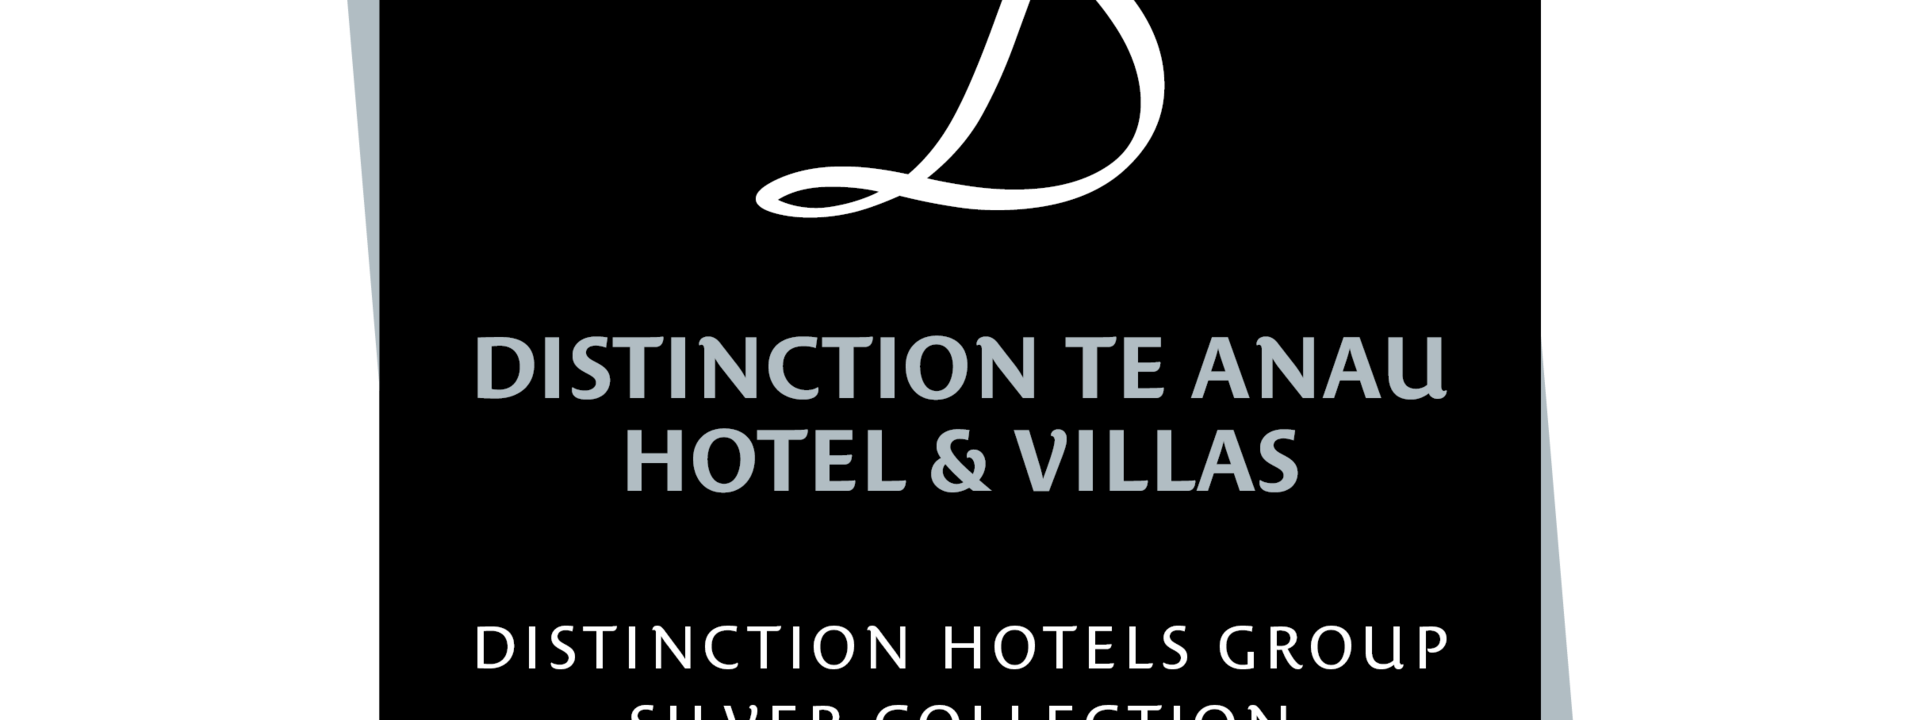 Distinction Te Anau Hotel & Villas Logo4 PNG.png